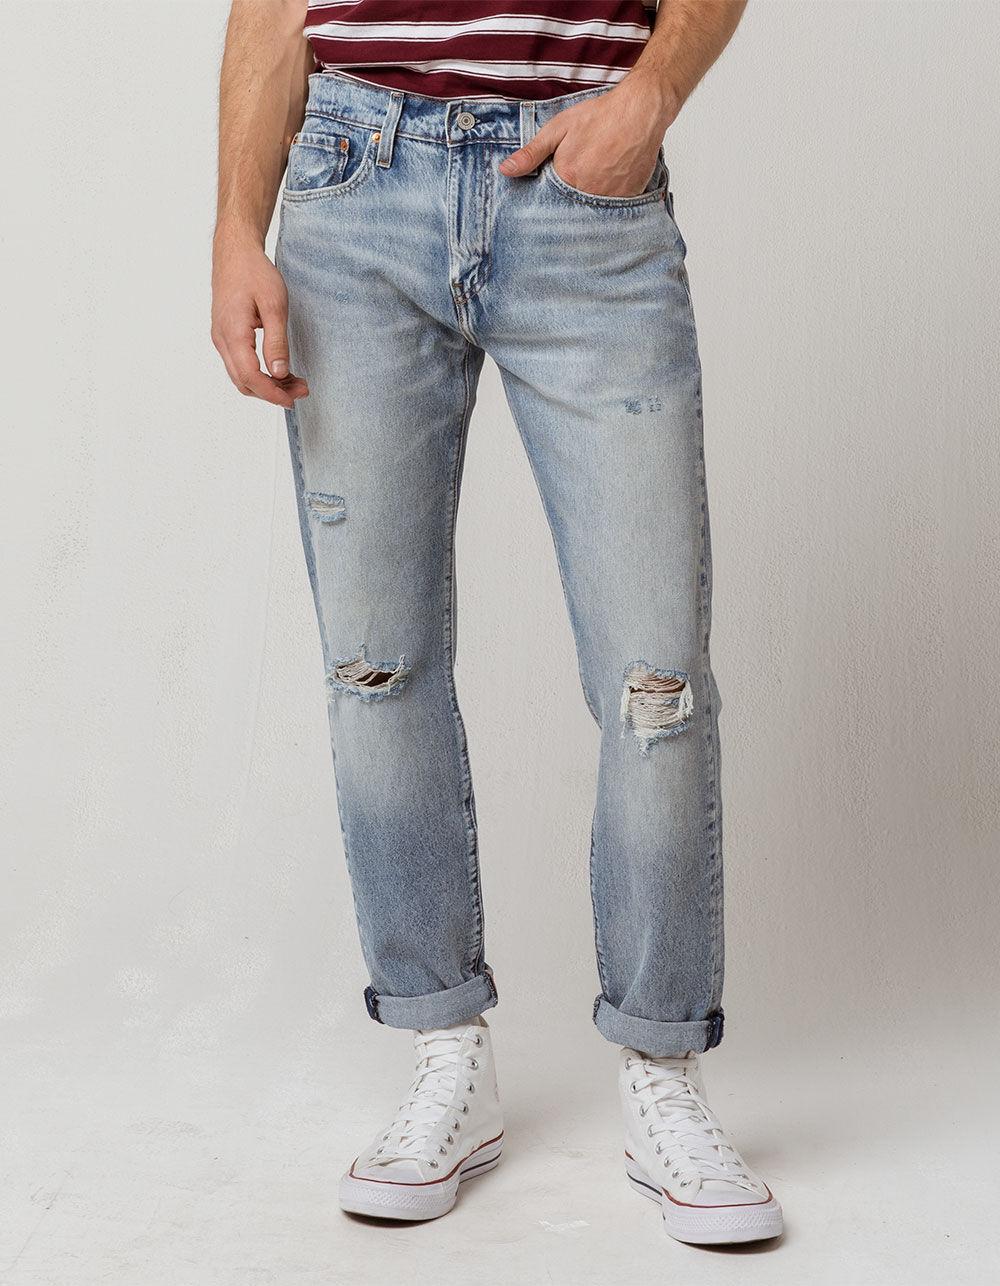 ball jeans mens